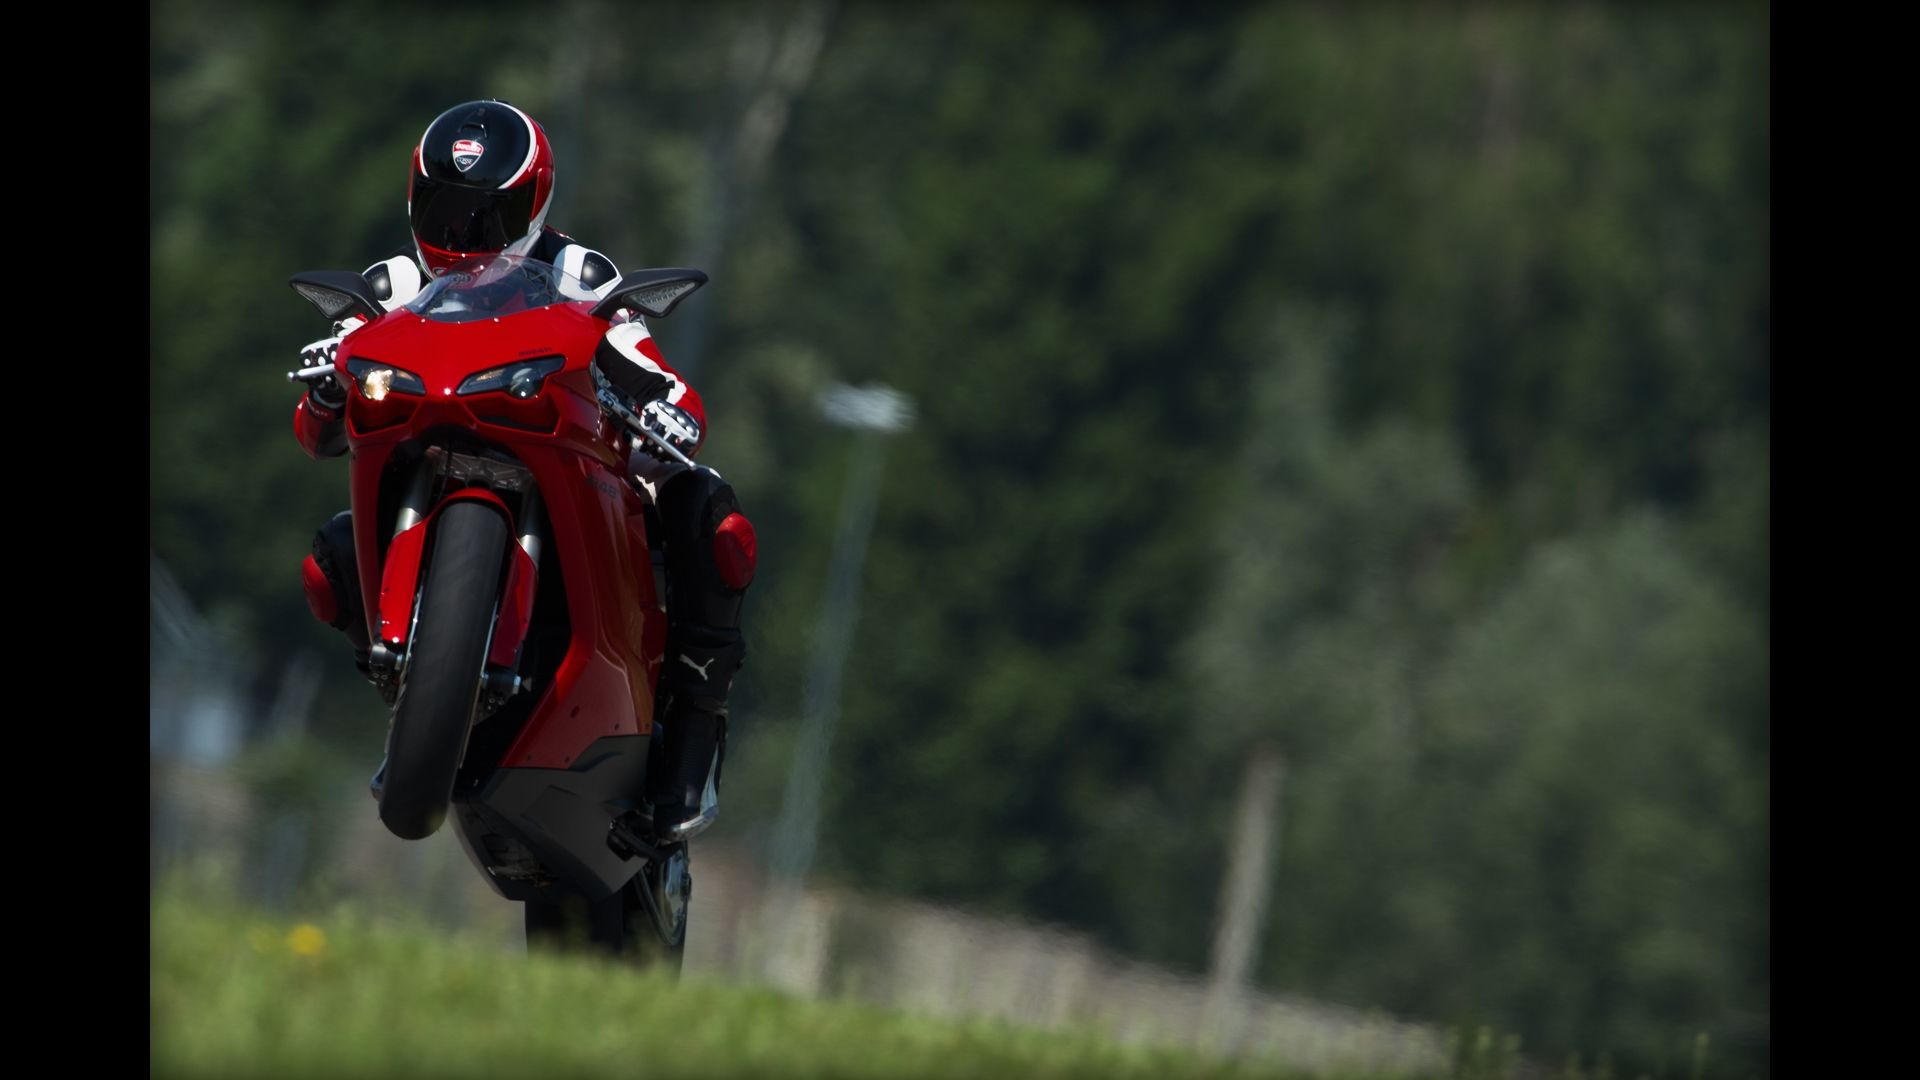 2013 Ducati Superbike 848 EVO